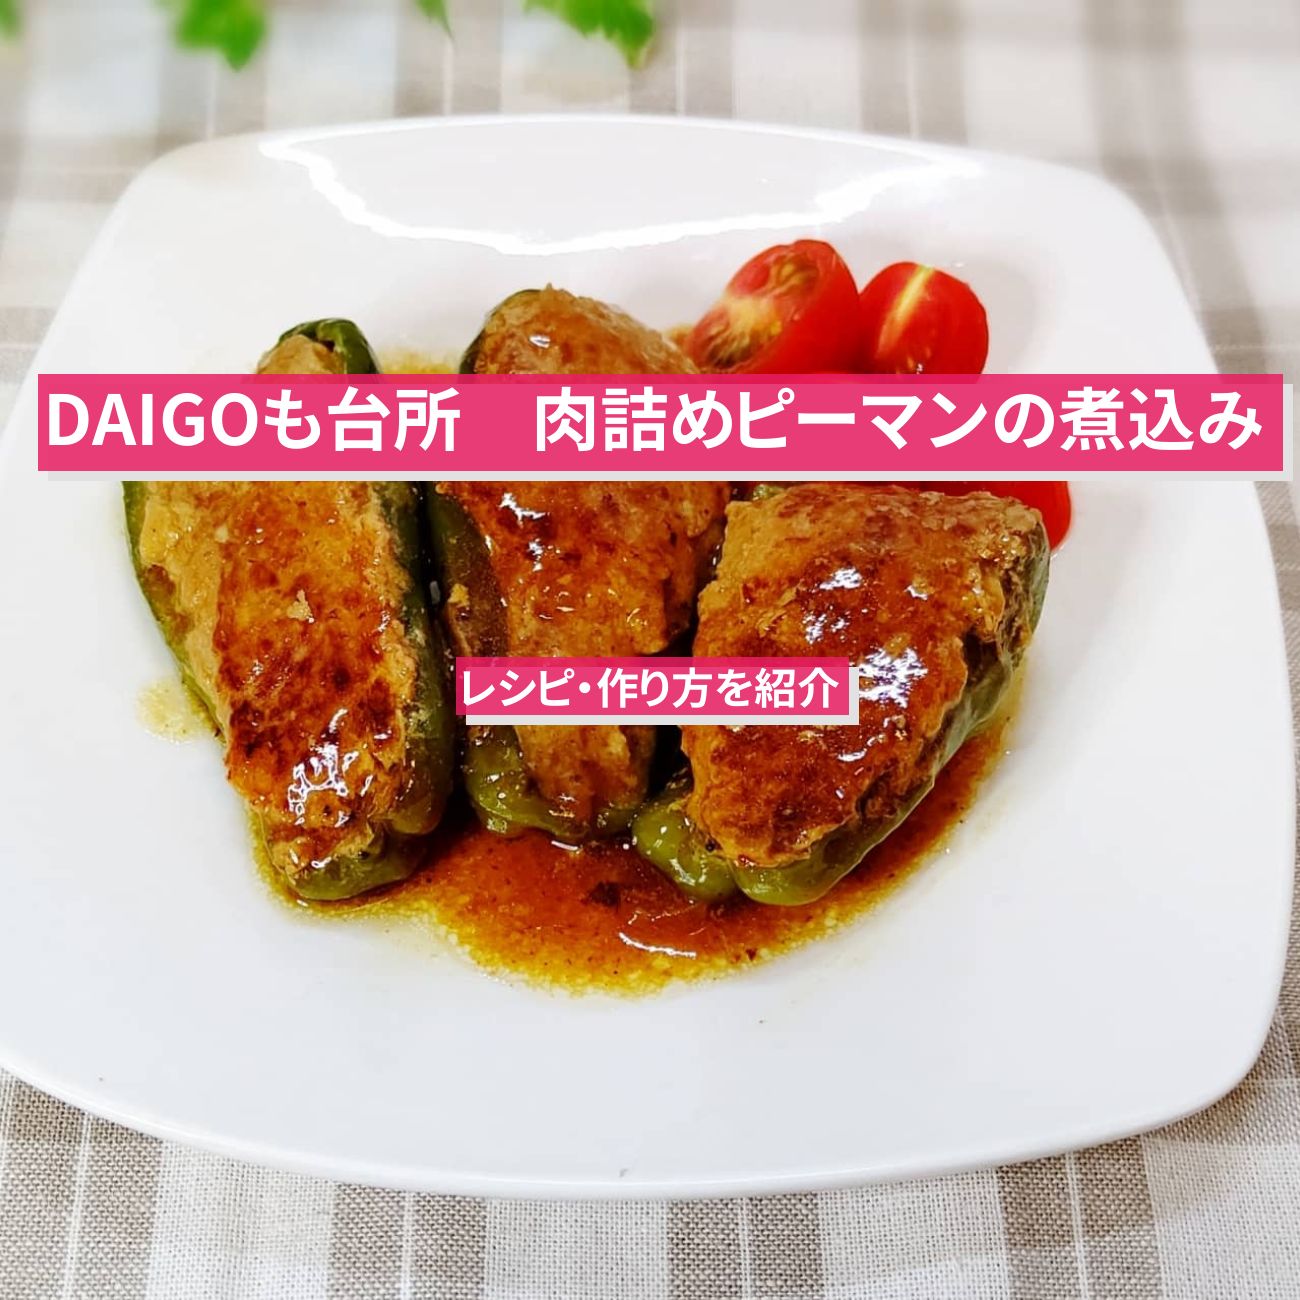 【DAIGOも台所】『肉詰めピーマンの煮込み』のレシピ・作り方を紹介〔ダイゴも台所〕